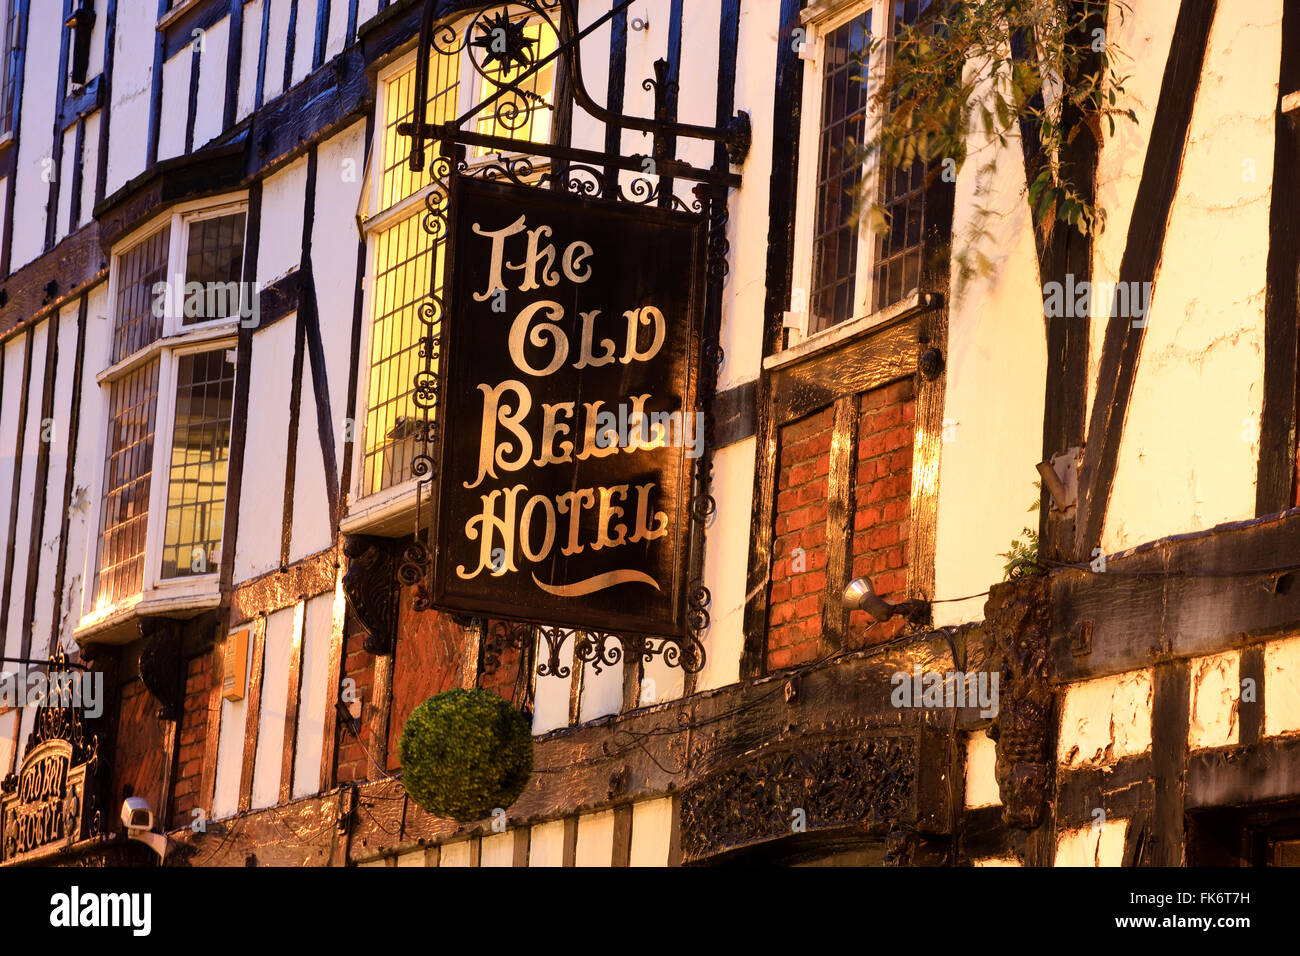 The Old Bell Hotel Sadler Gate Derby Derbyshire England at twilight Stock Photo